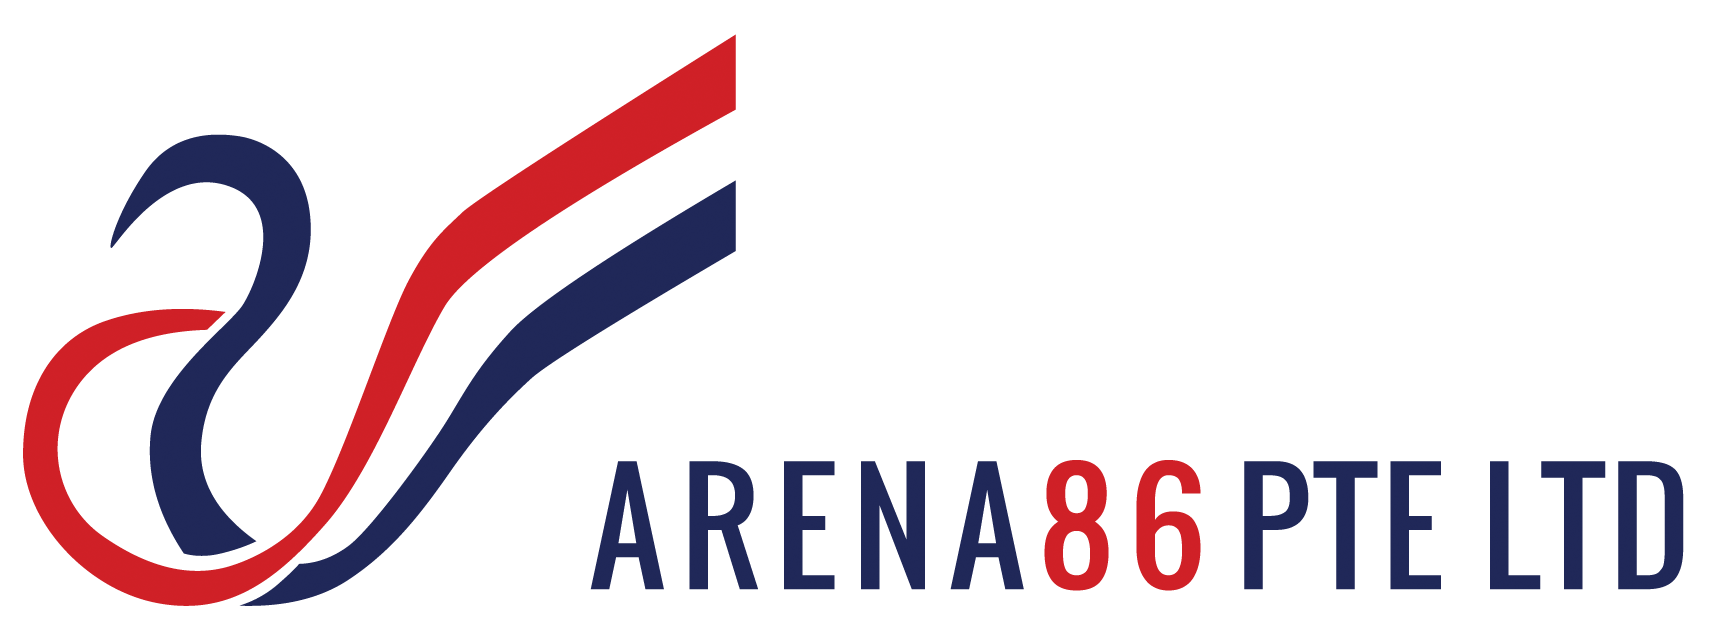 arena86